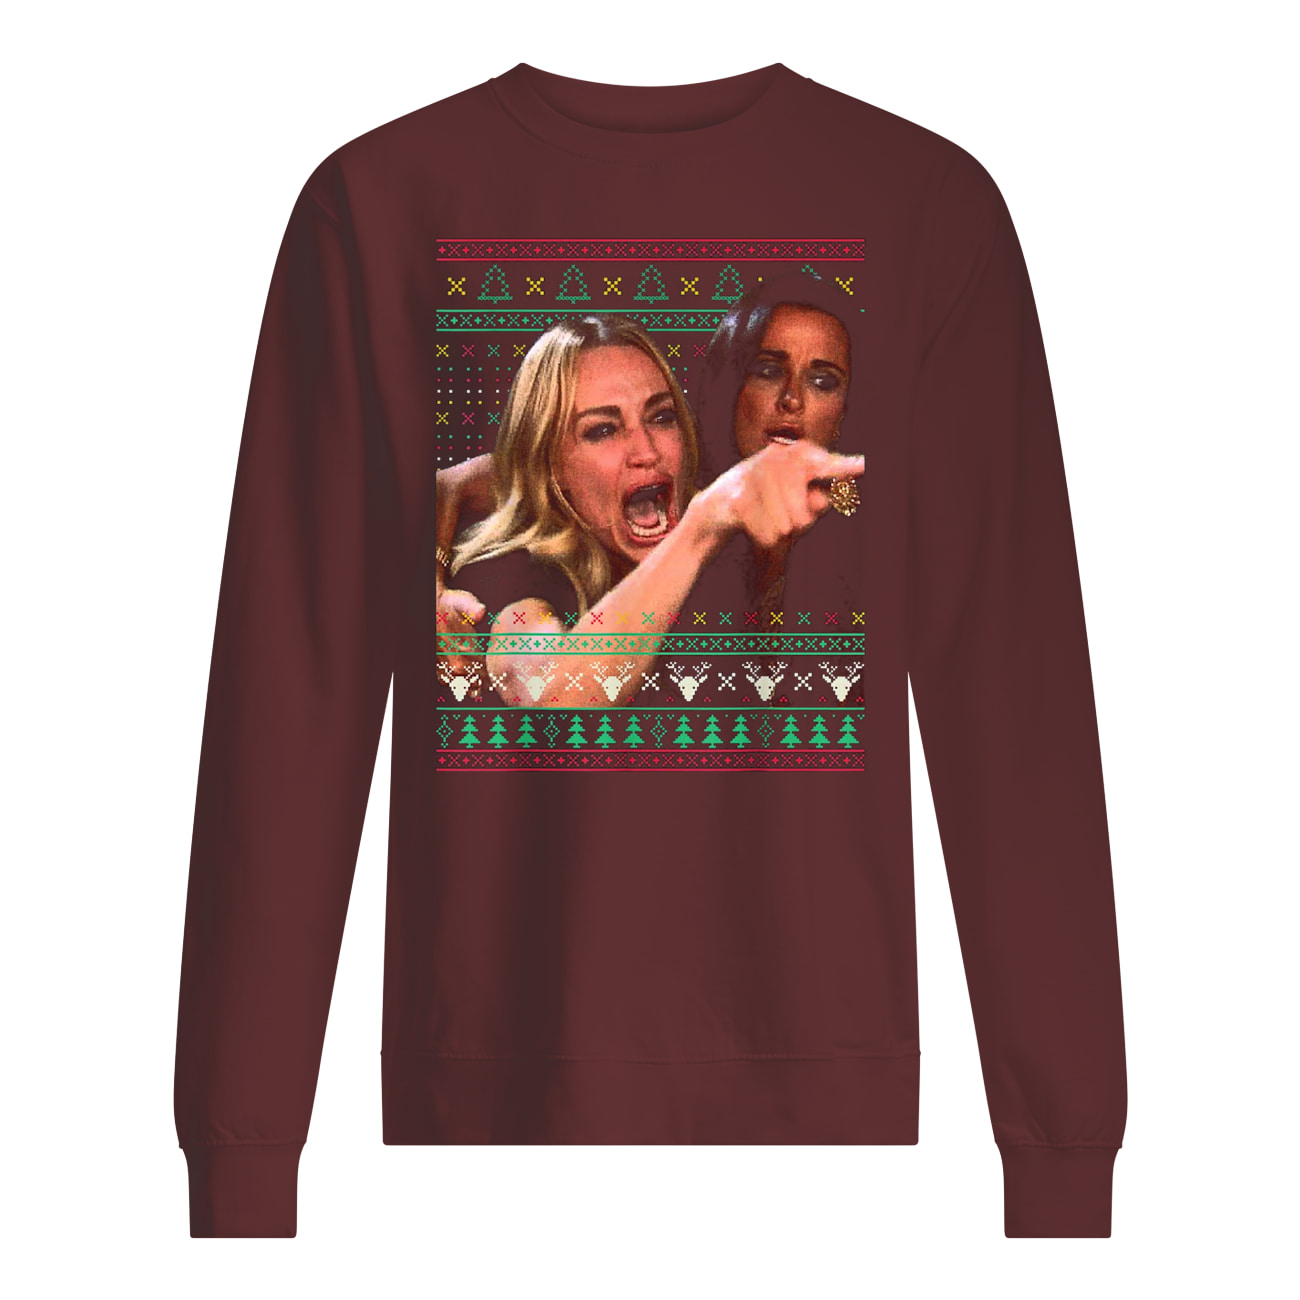 Woman yelling at cat meme ugly christmas sweatshirt